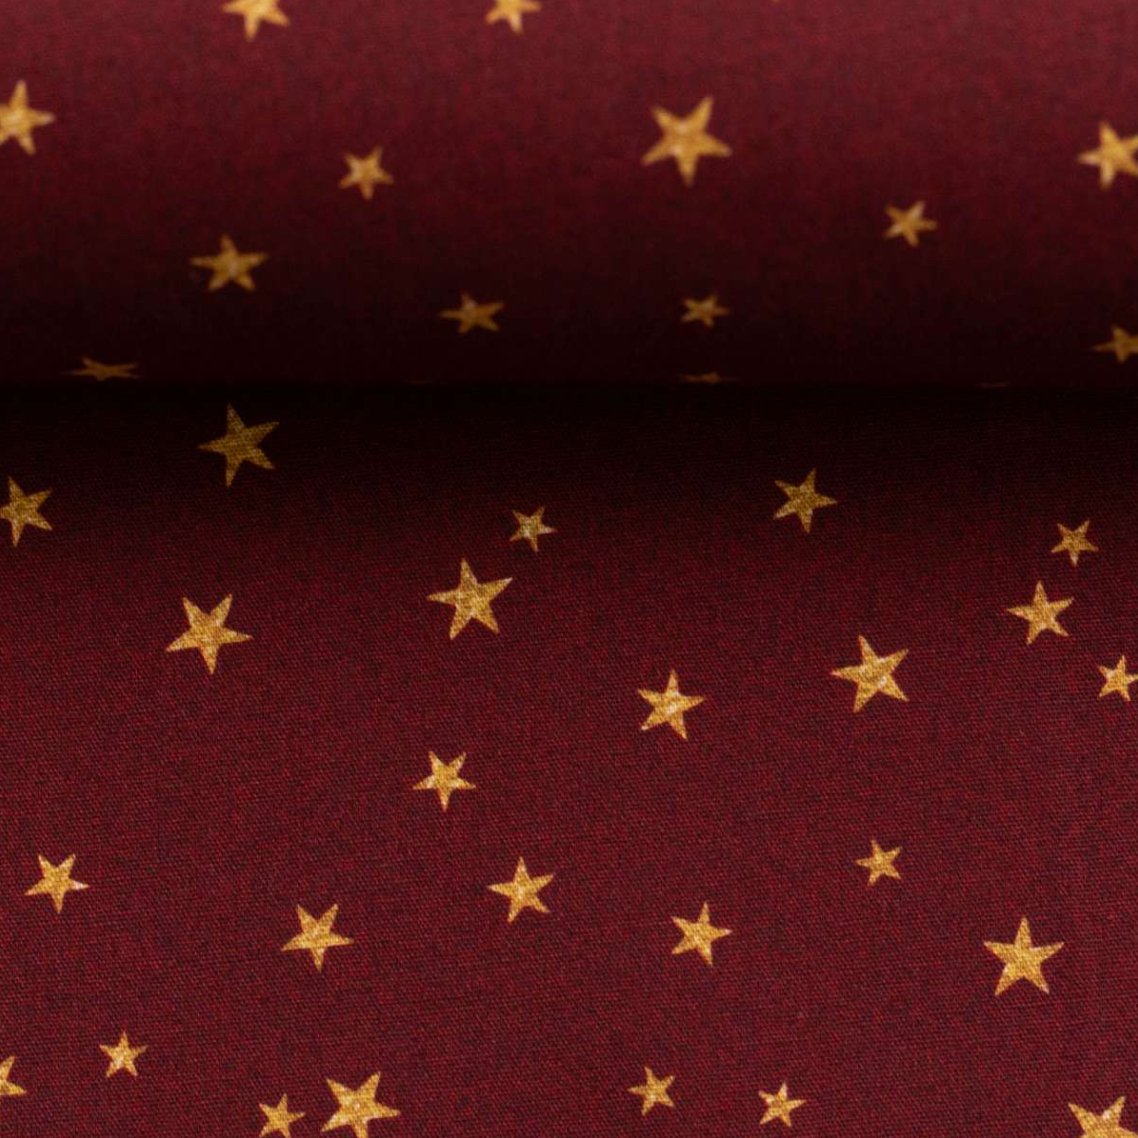 Baumwolle Sterne rot-gold - FinasIdeen